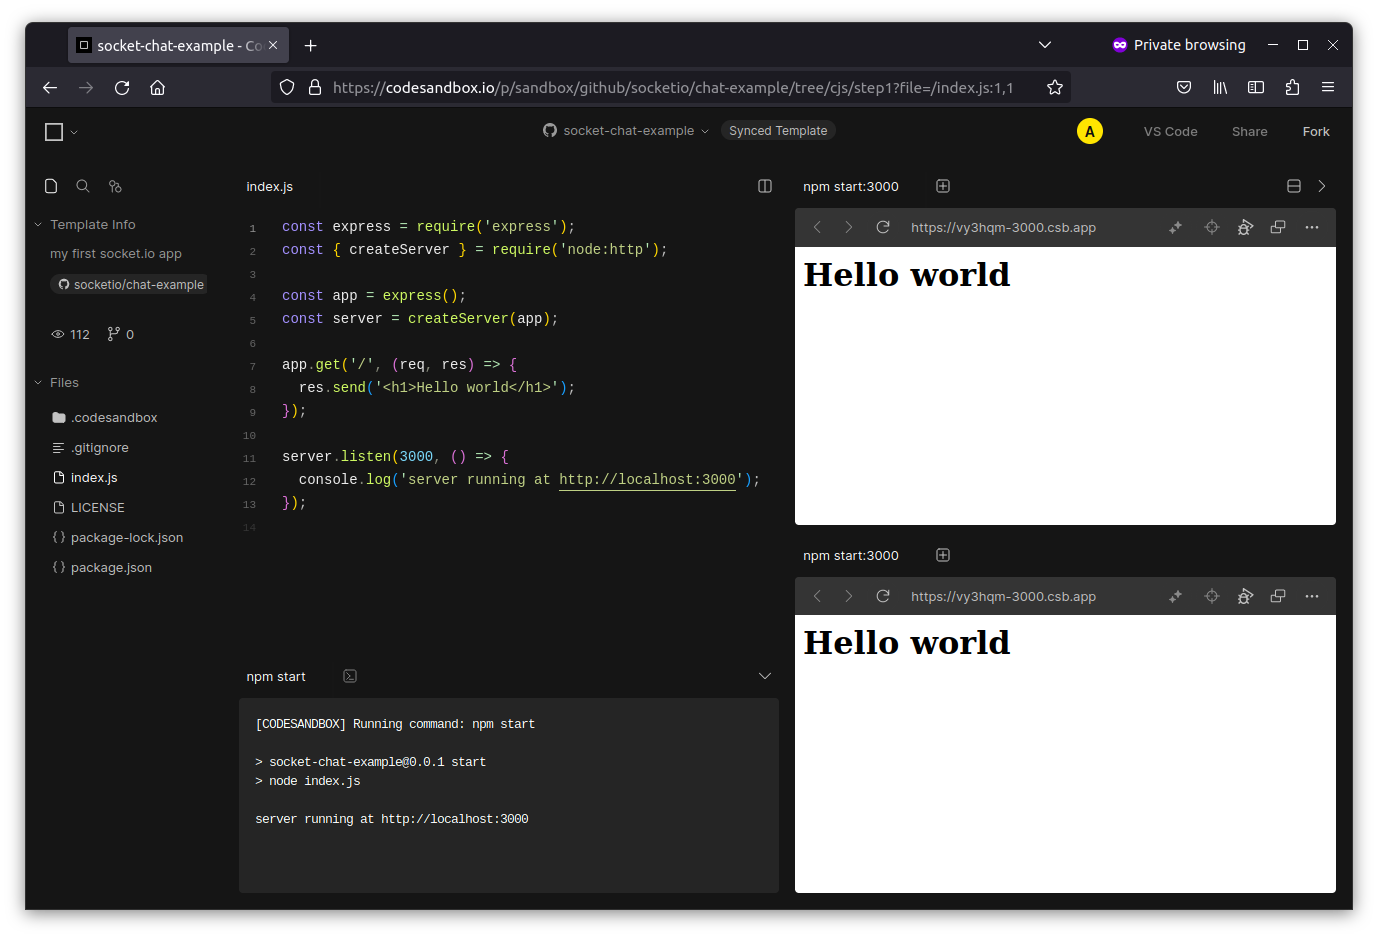 Screenshot of the CodeSandbox platform